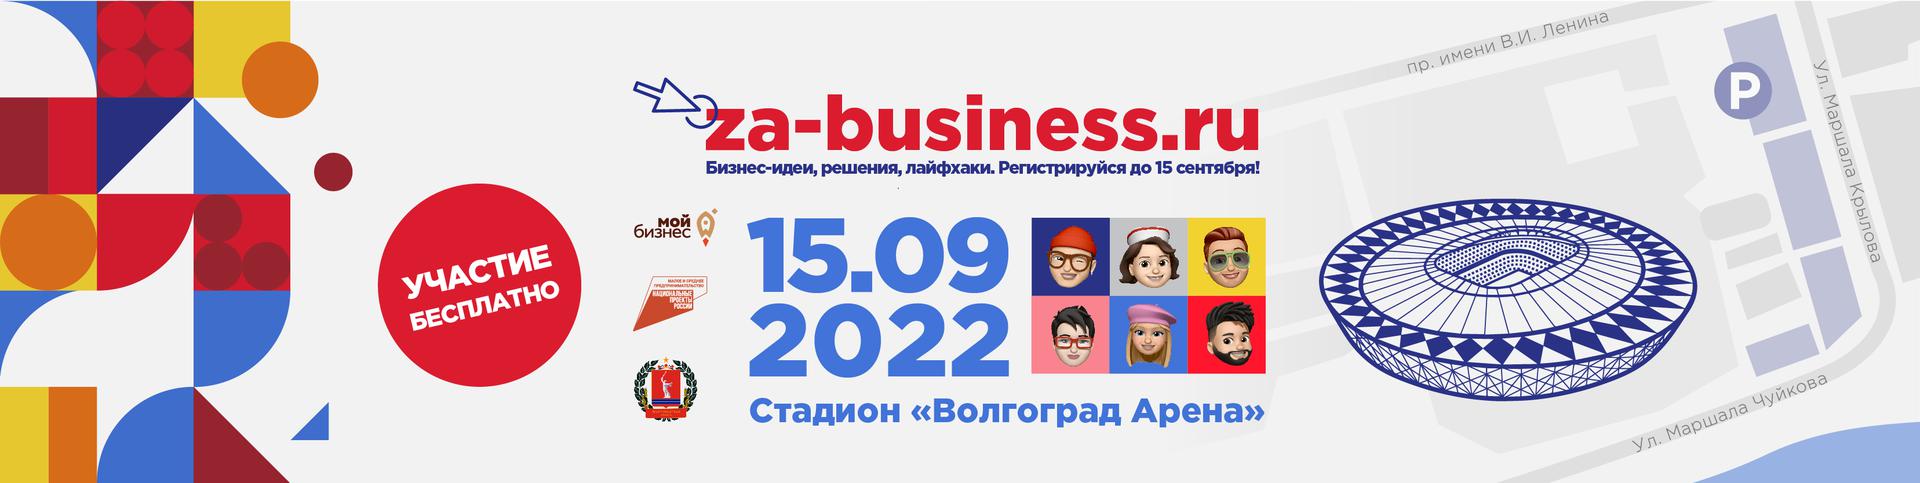 https://serad.ru/images/doc2022/economic/web_network_za_b_2022_vk_1590x400.jpg